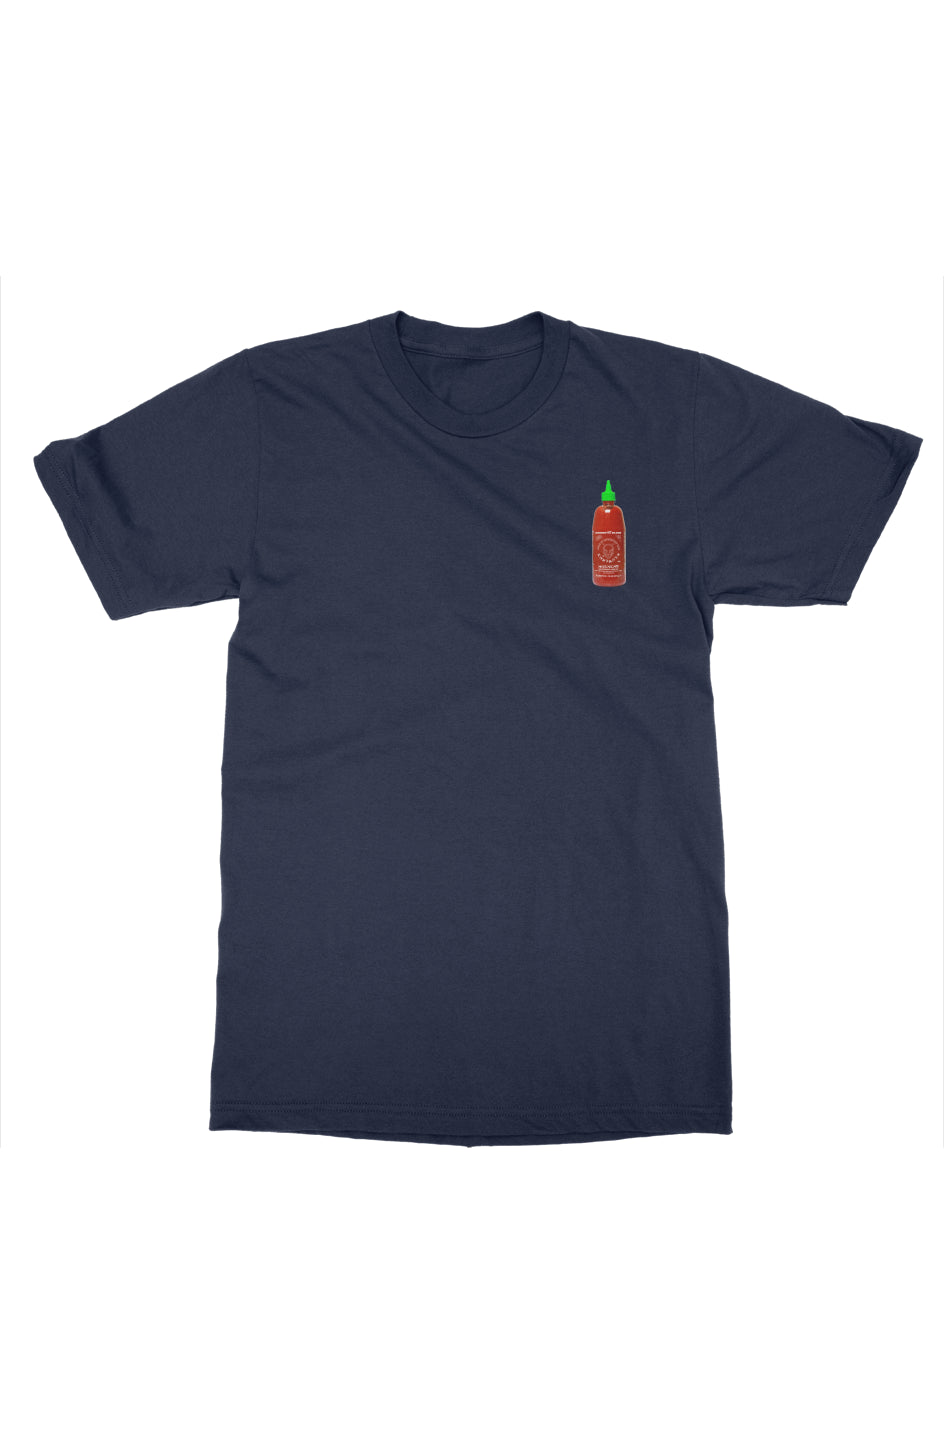 SrirachaSwap T-Shirt